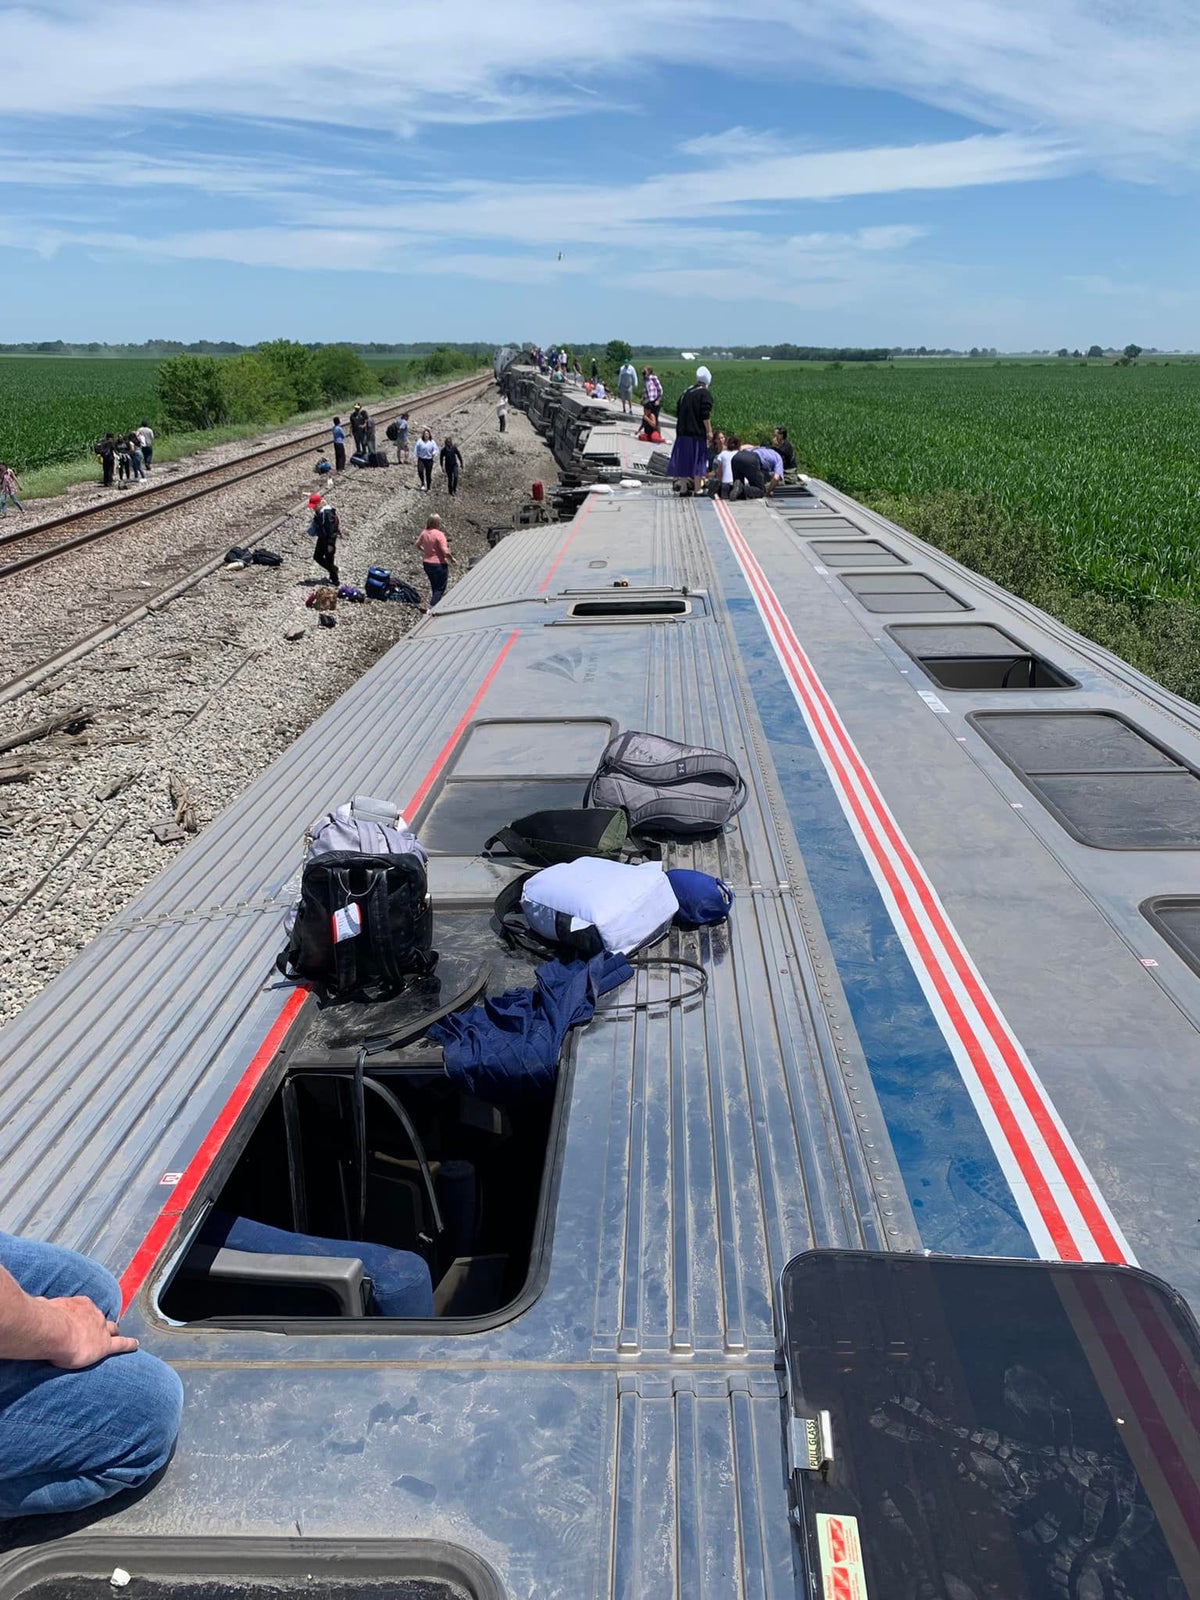 Hero teacher on first ever Amtrak trip helps rescue passengers in Missouri derailment: ‘It was chaos’